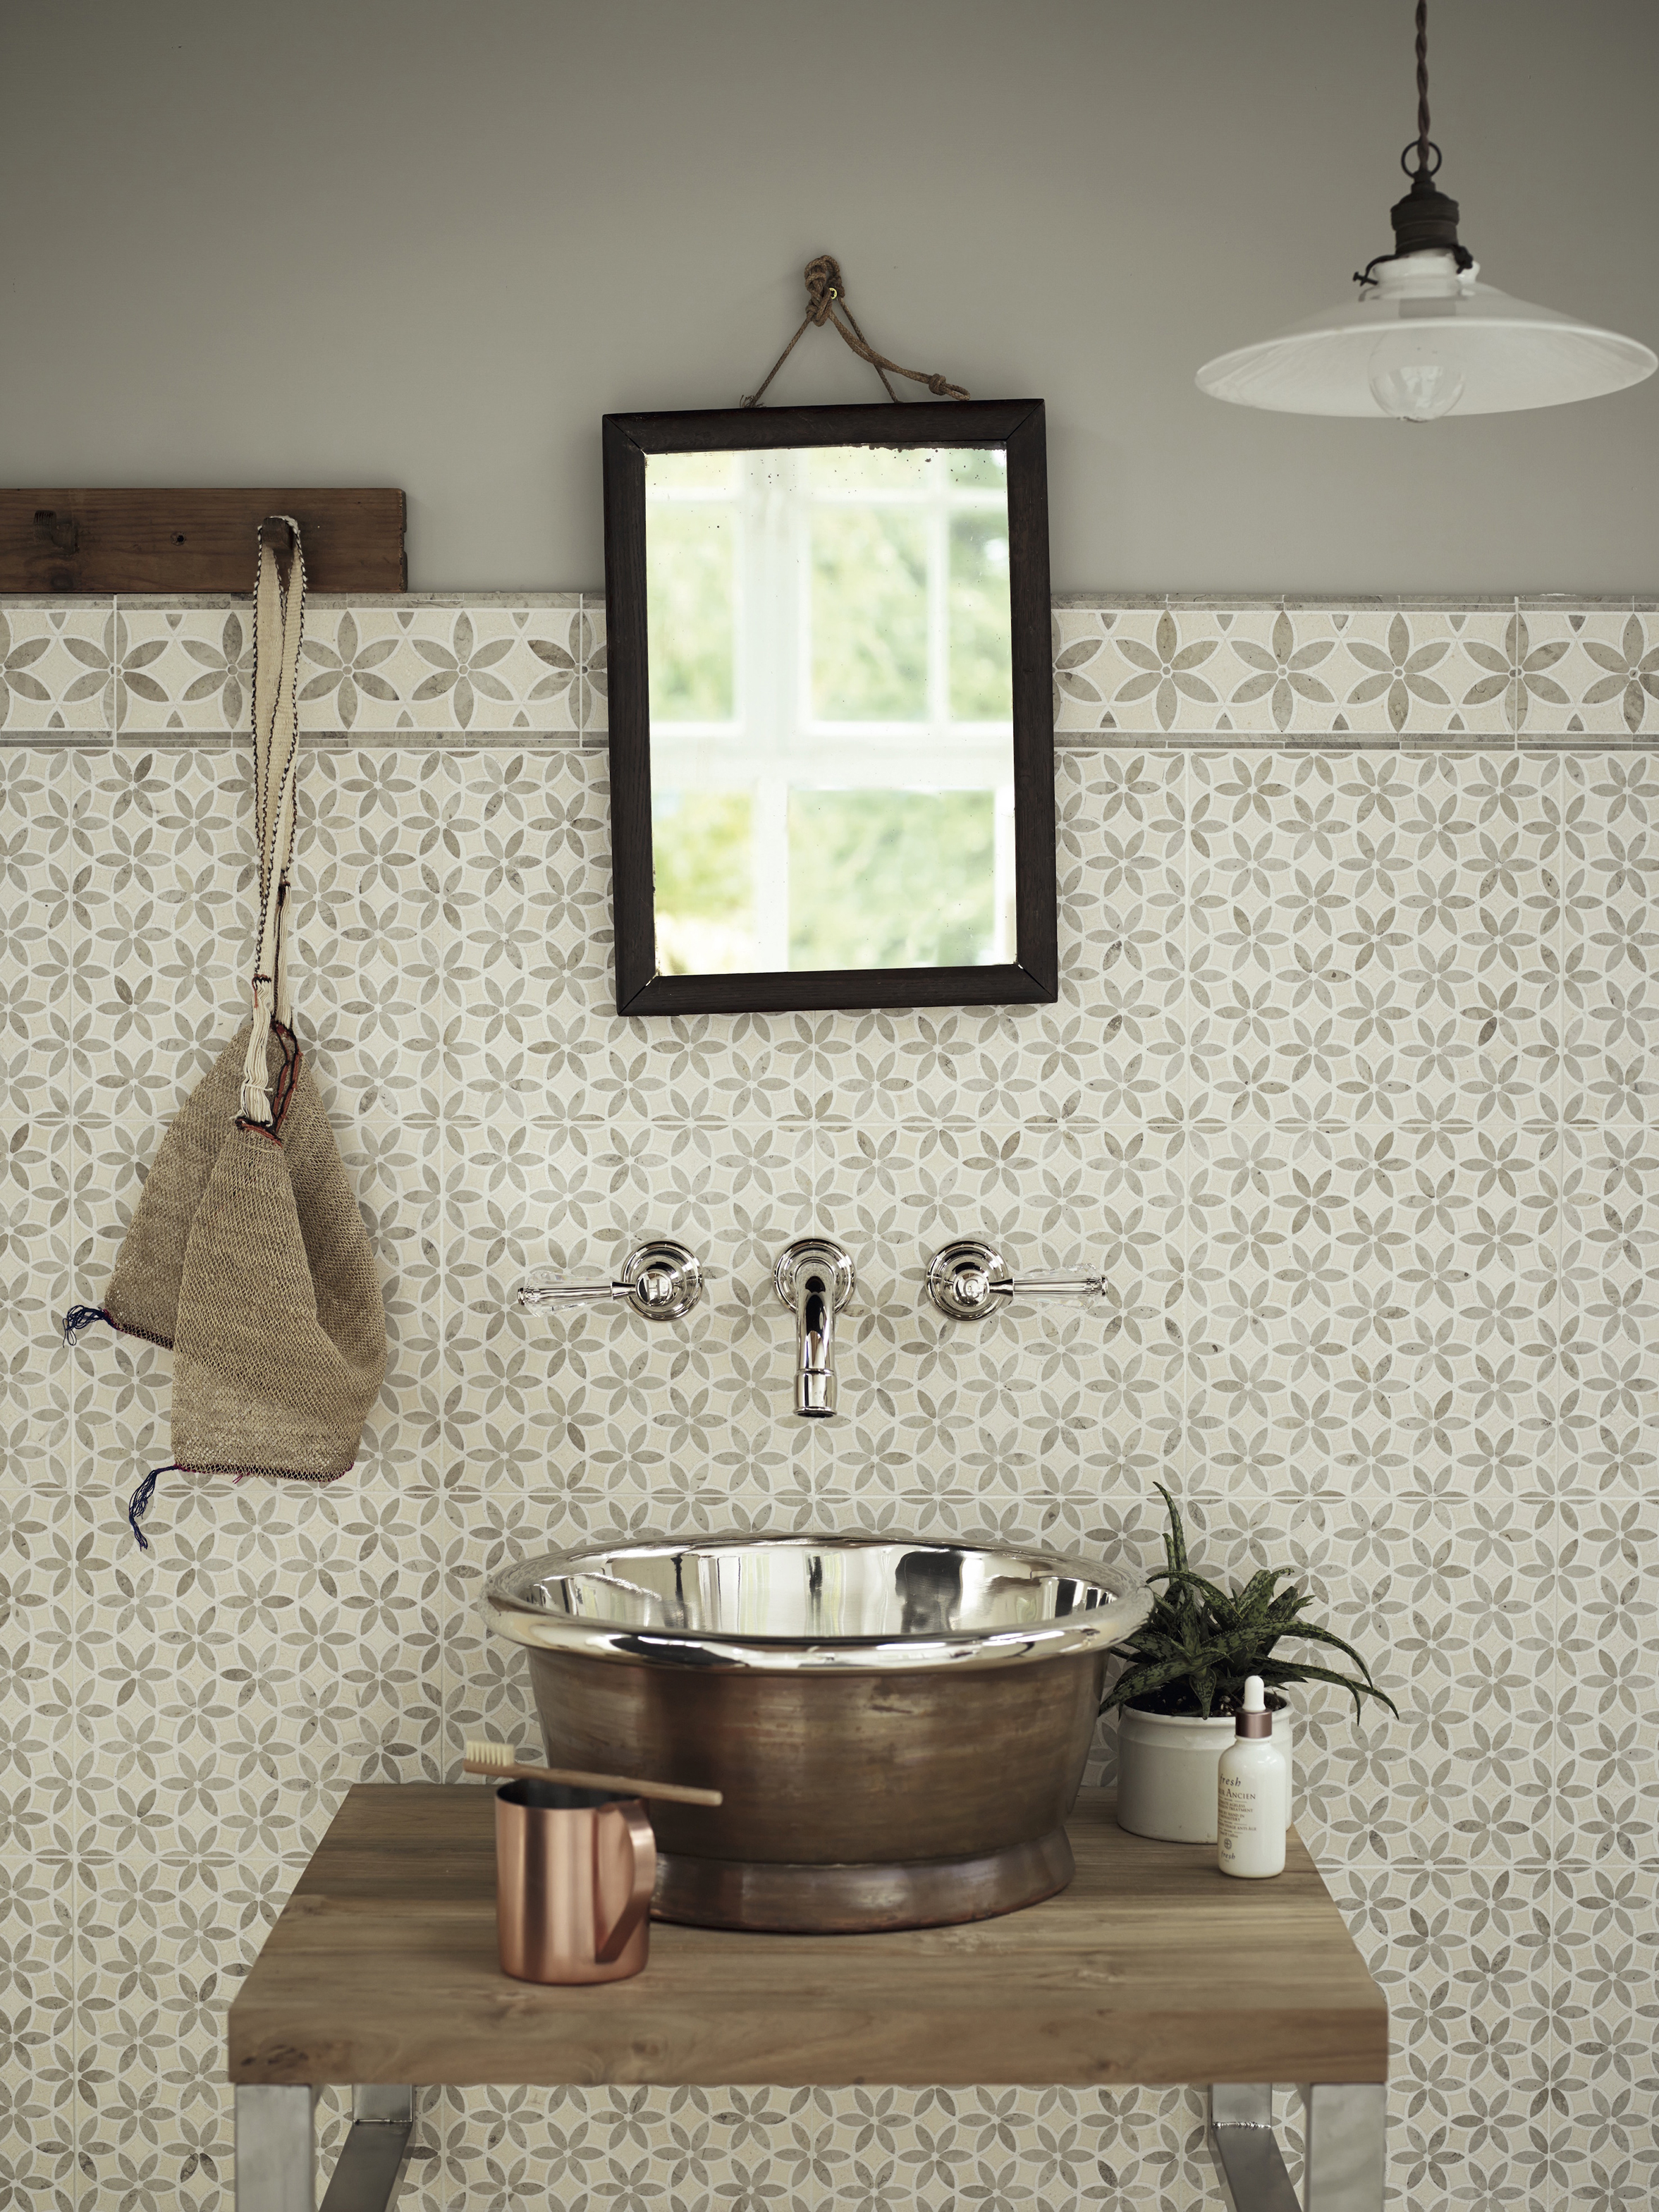 bathroom sink with floral motif tiles